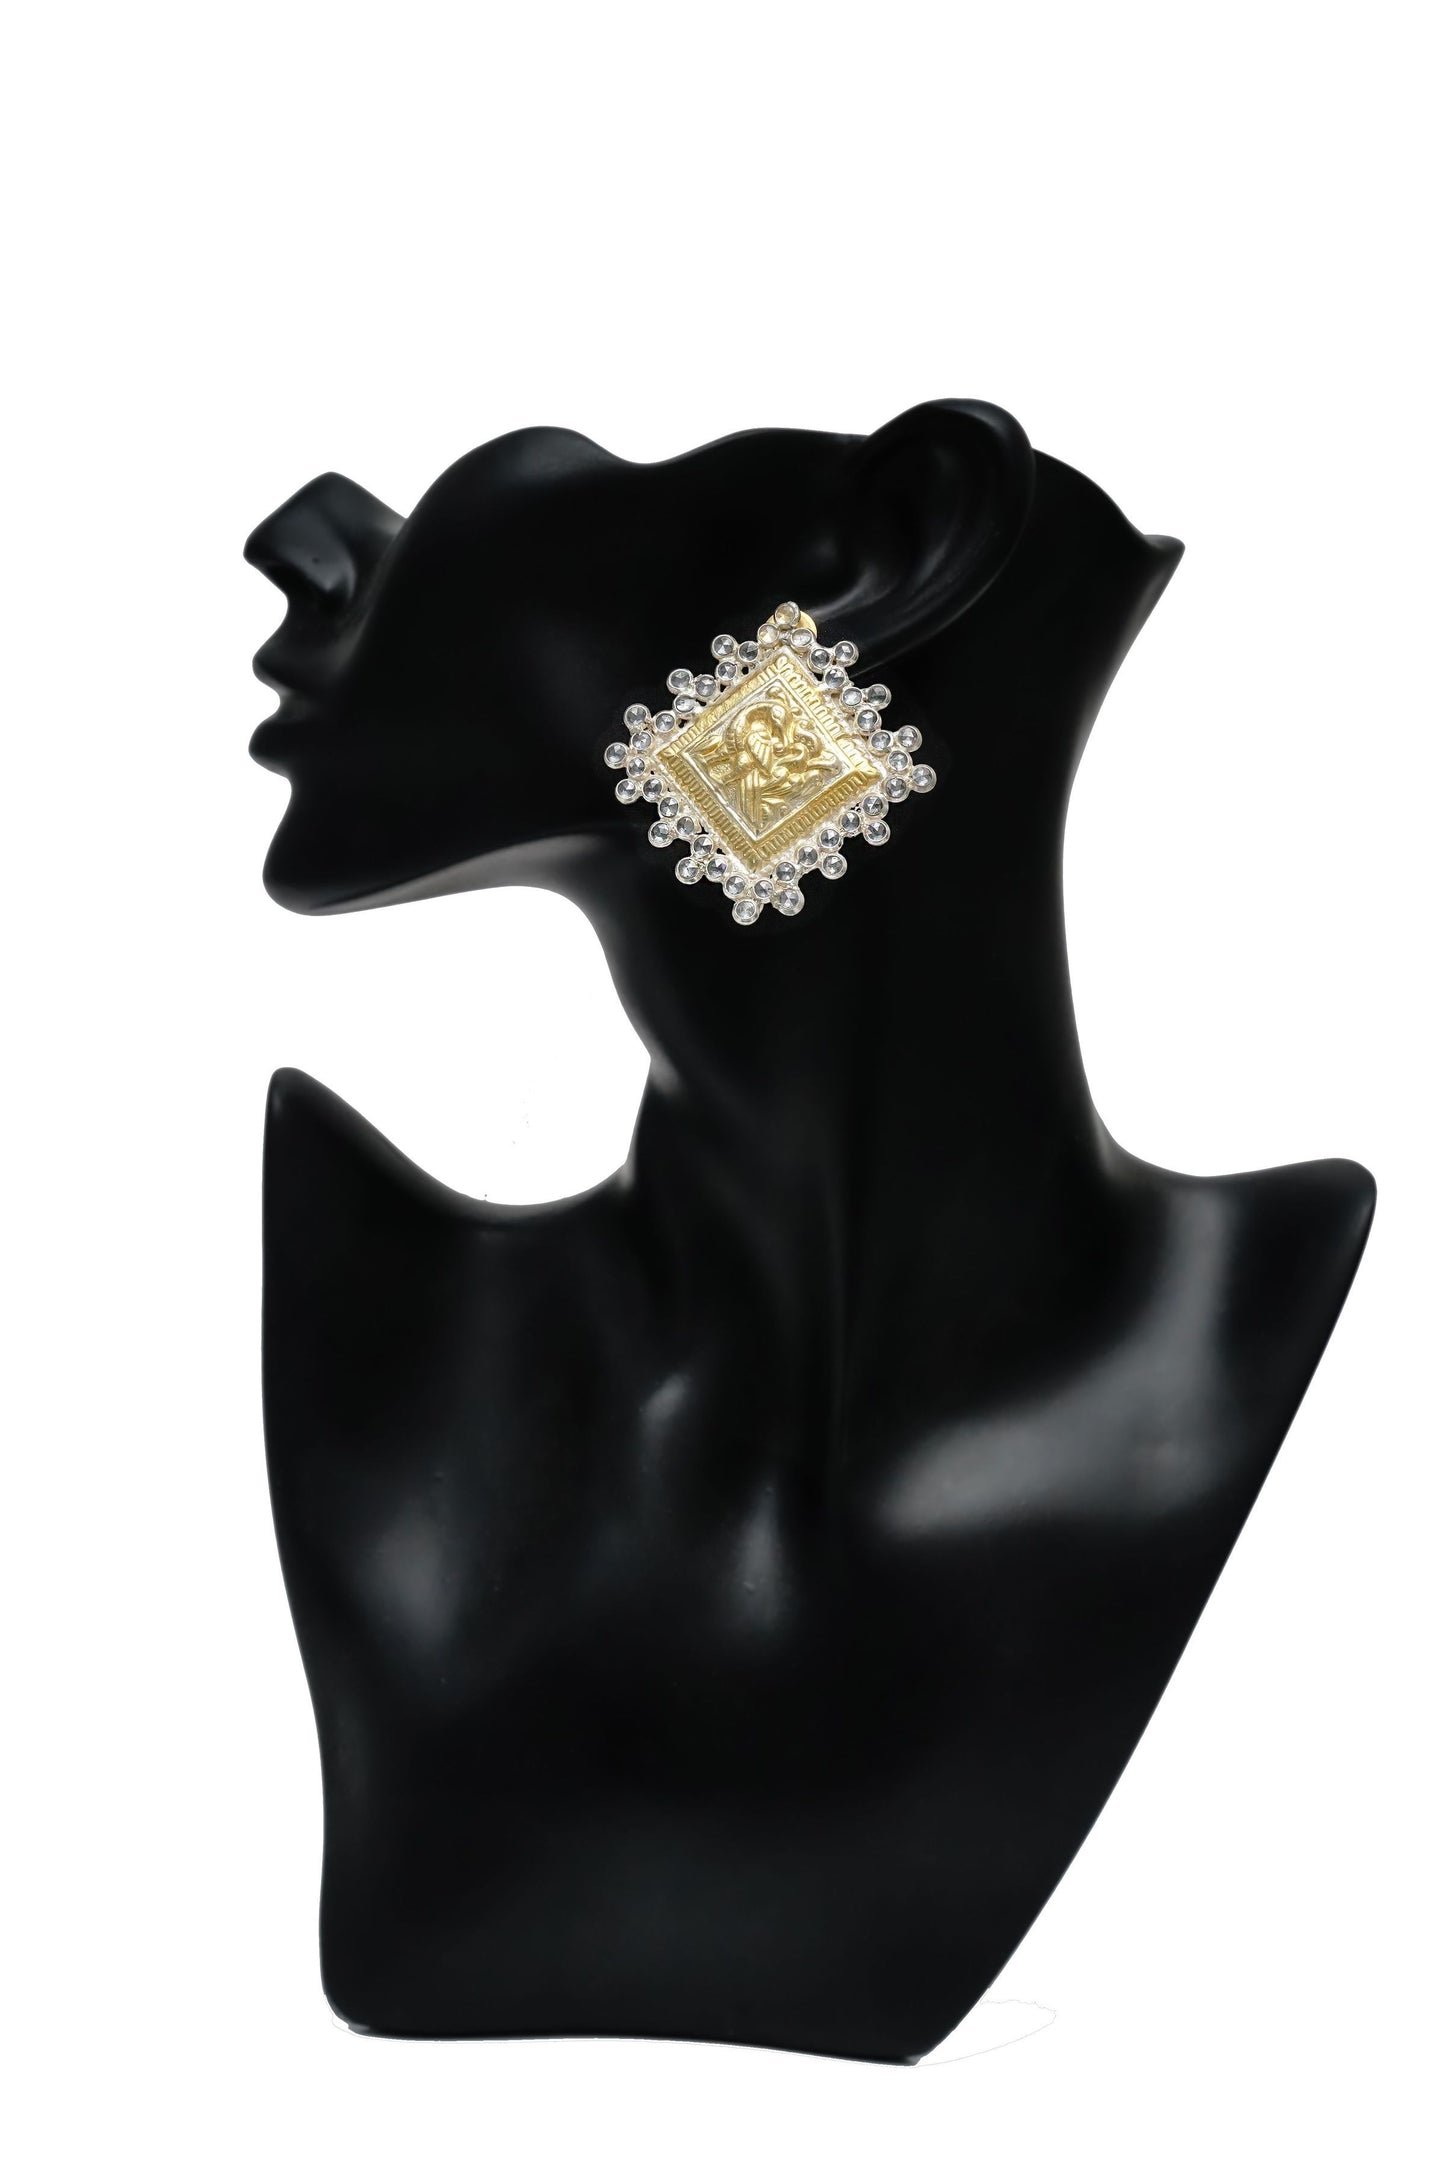 925 Silver Two Tone Peacock Earrings with Crystal Checkers - Neeta Boochra Jewellery